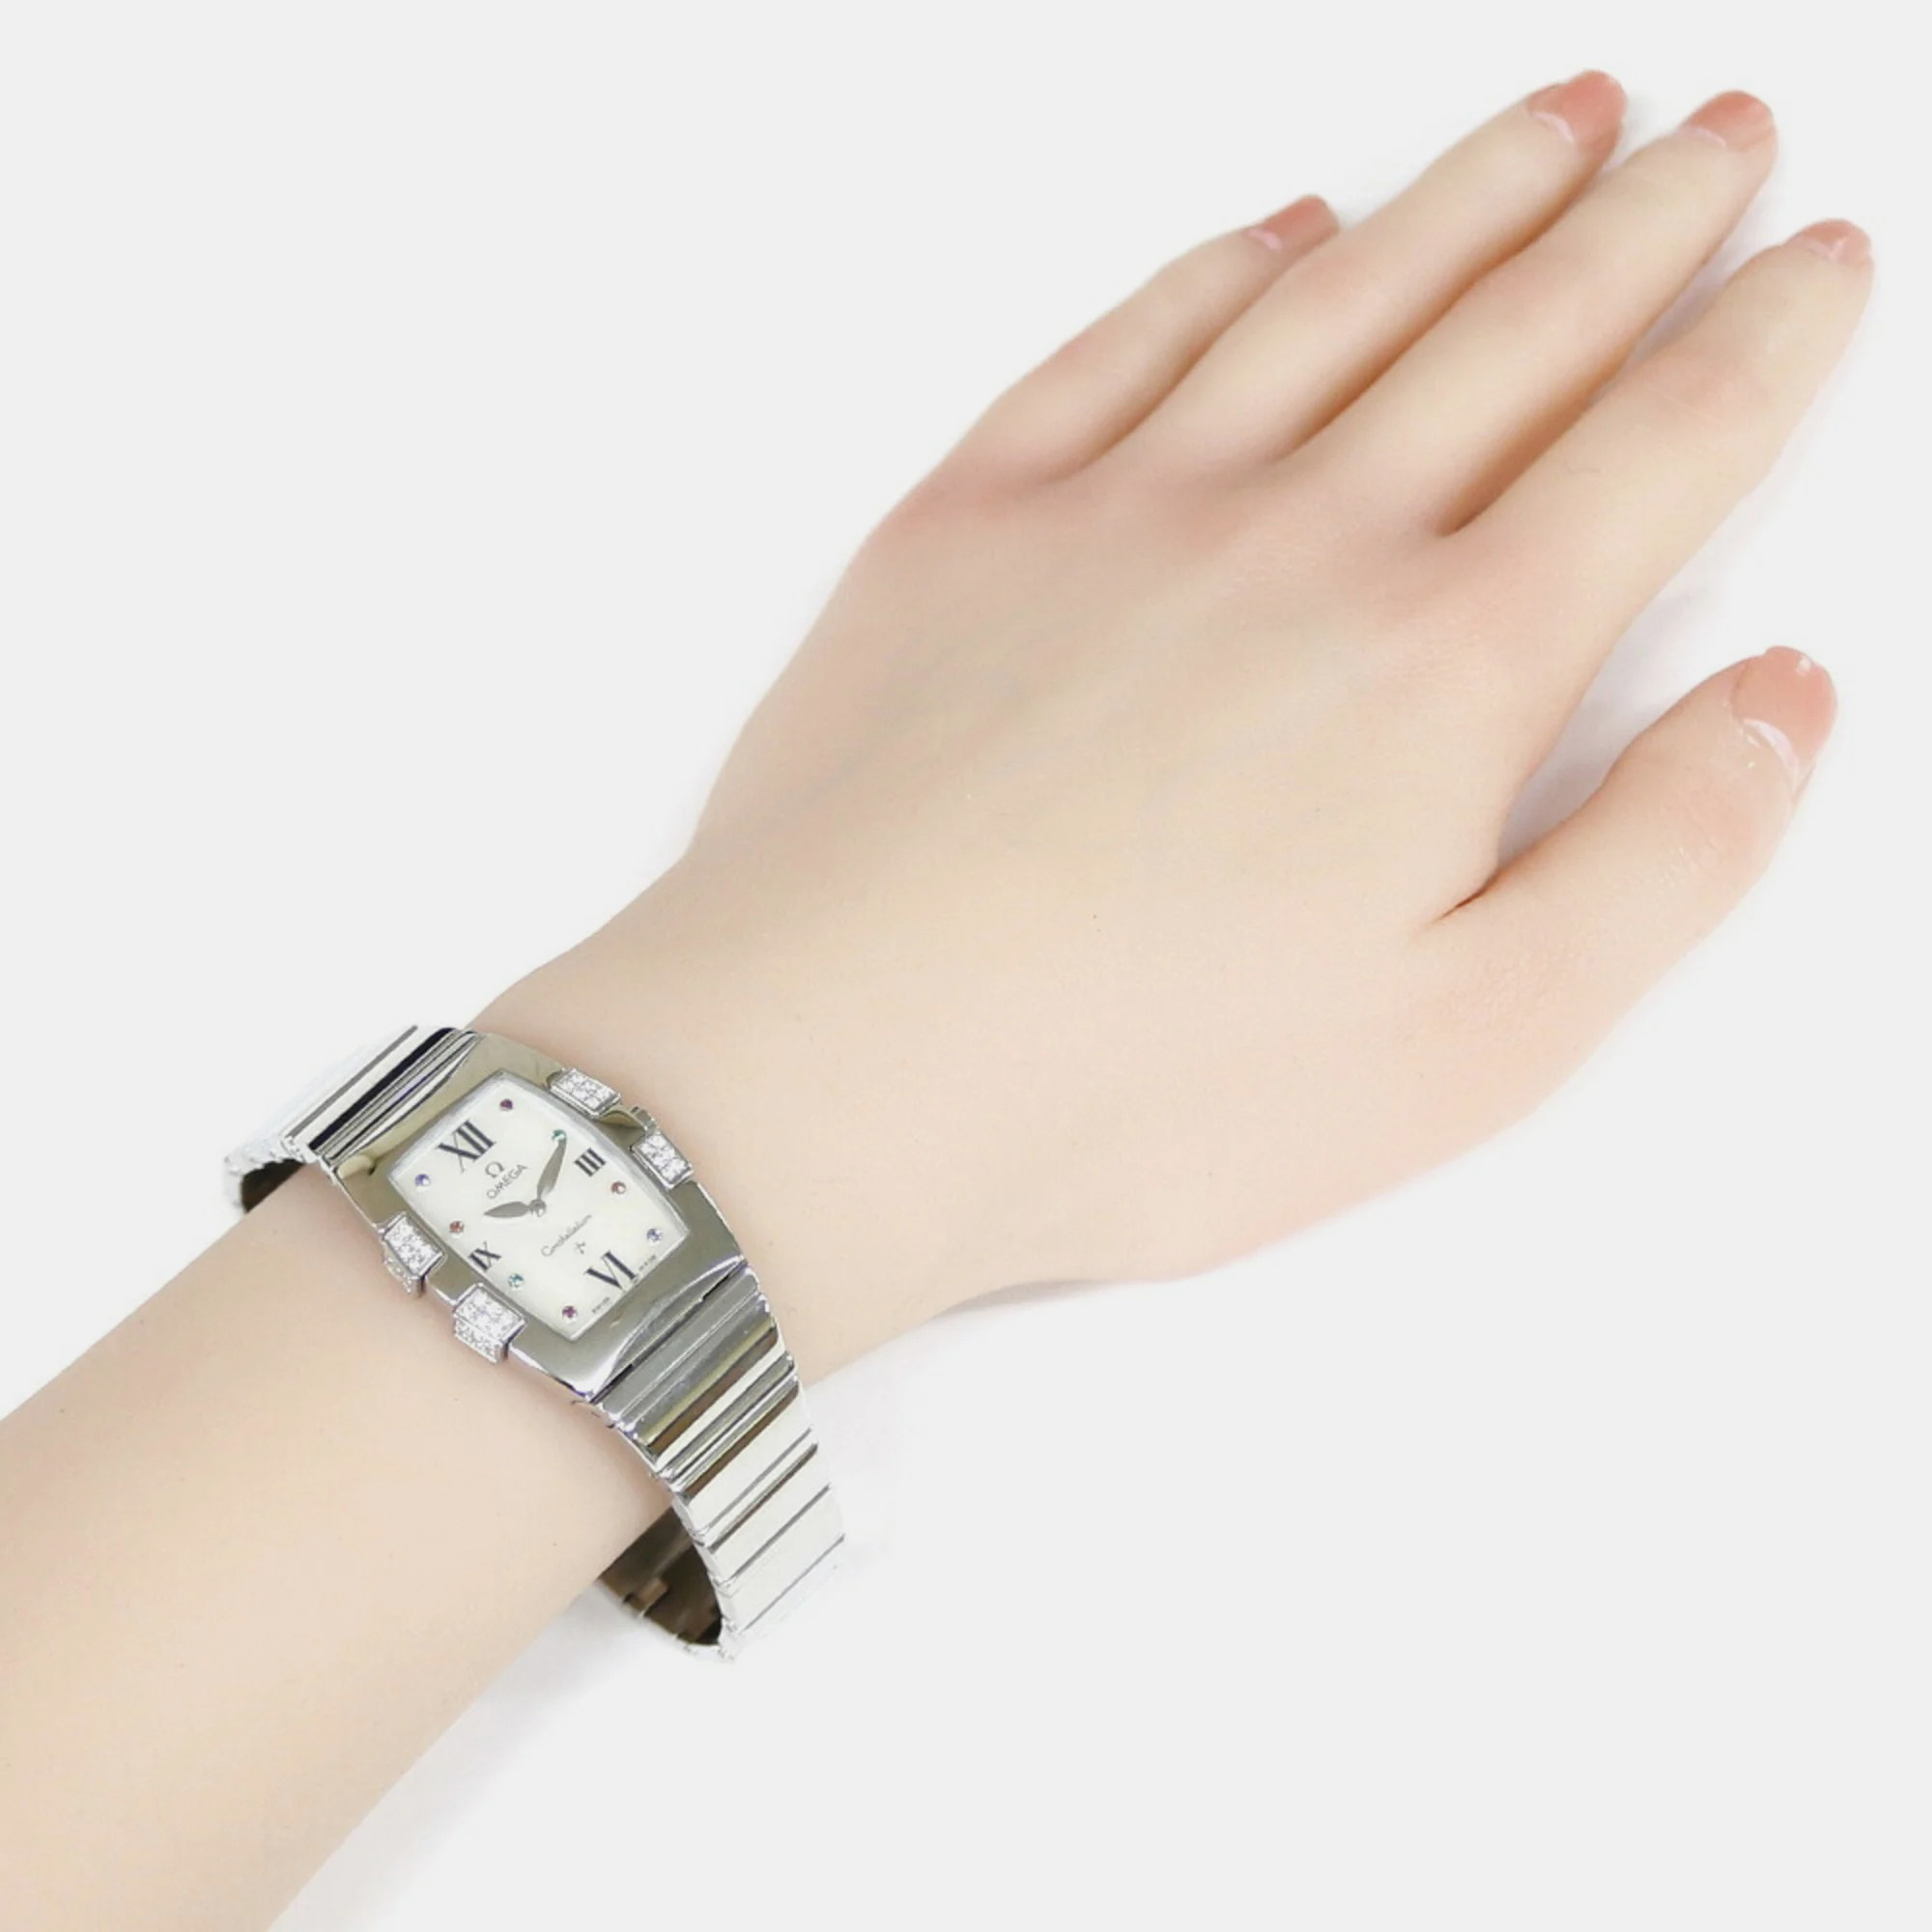 Omega Silver Stainless Steel Constellation 1586.79 Quartz Women's Wristwatch 26.5 Mm